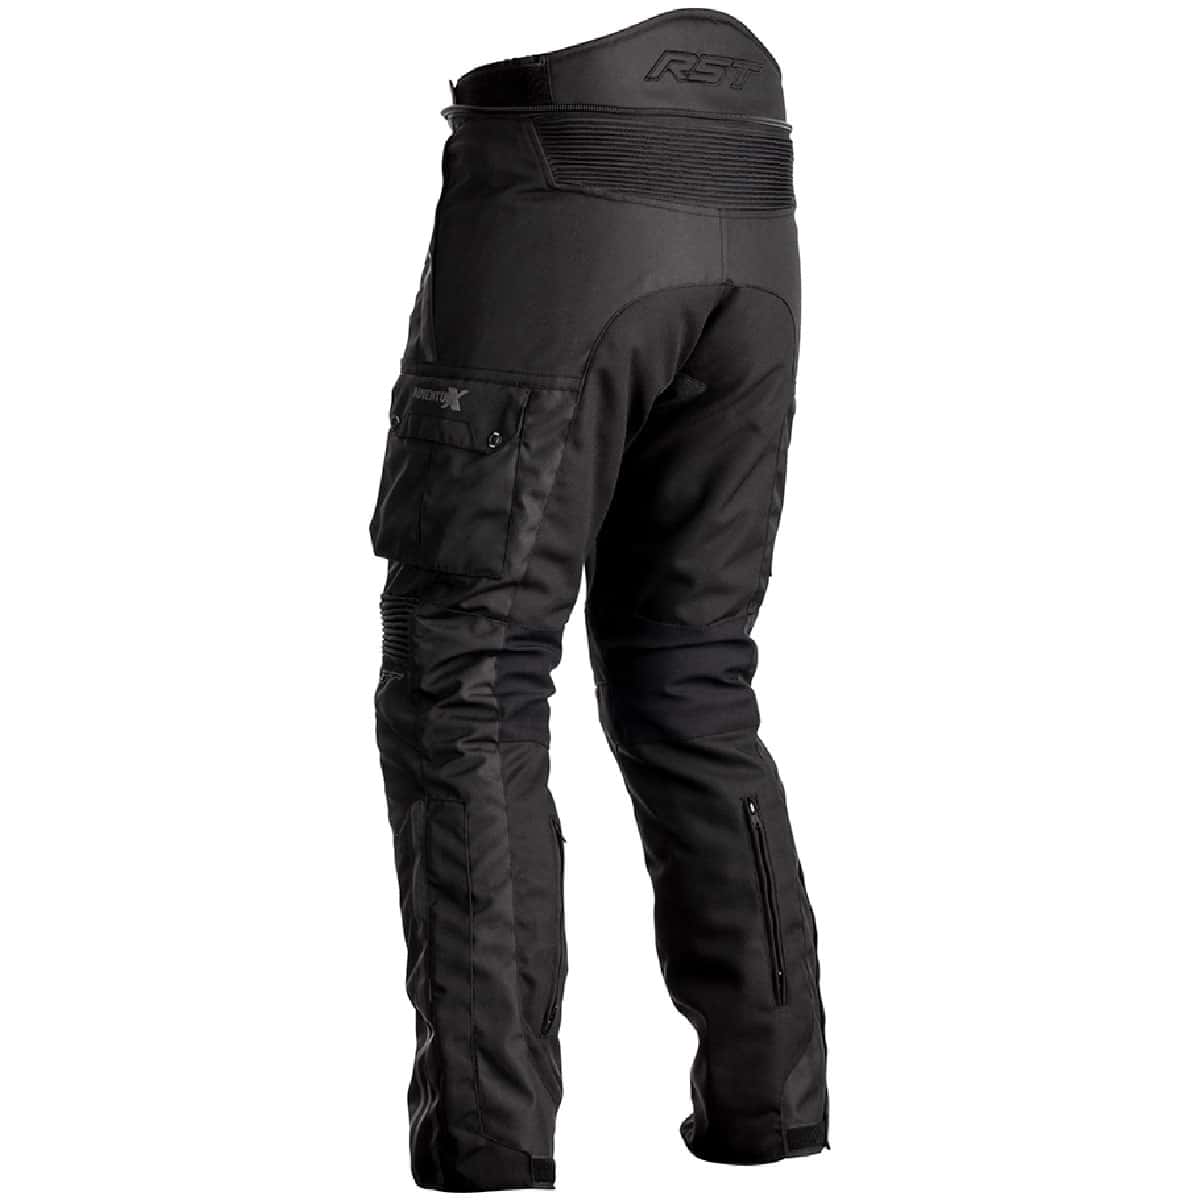 RST Pro Series Adventure-X Textile Trousers long